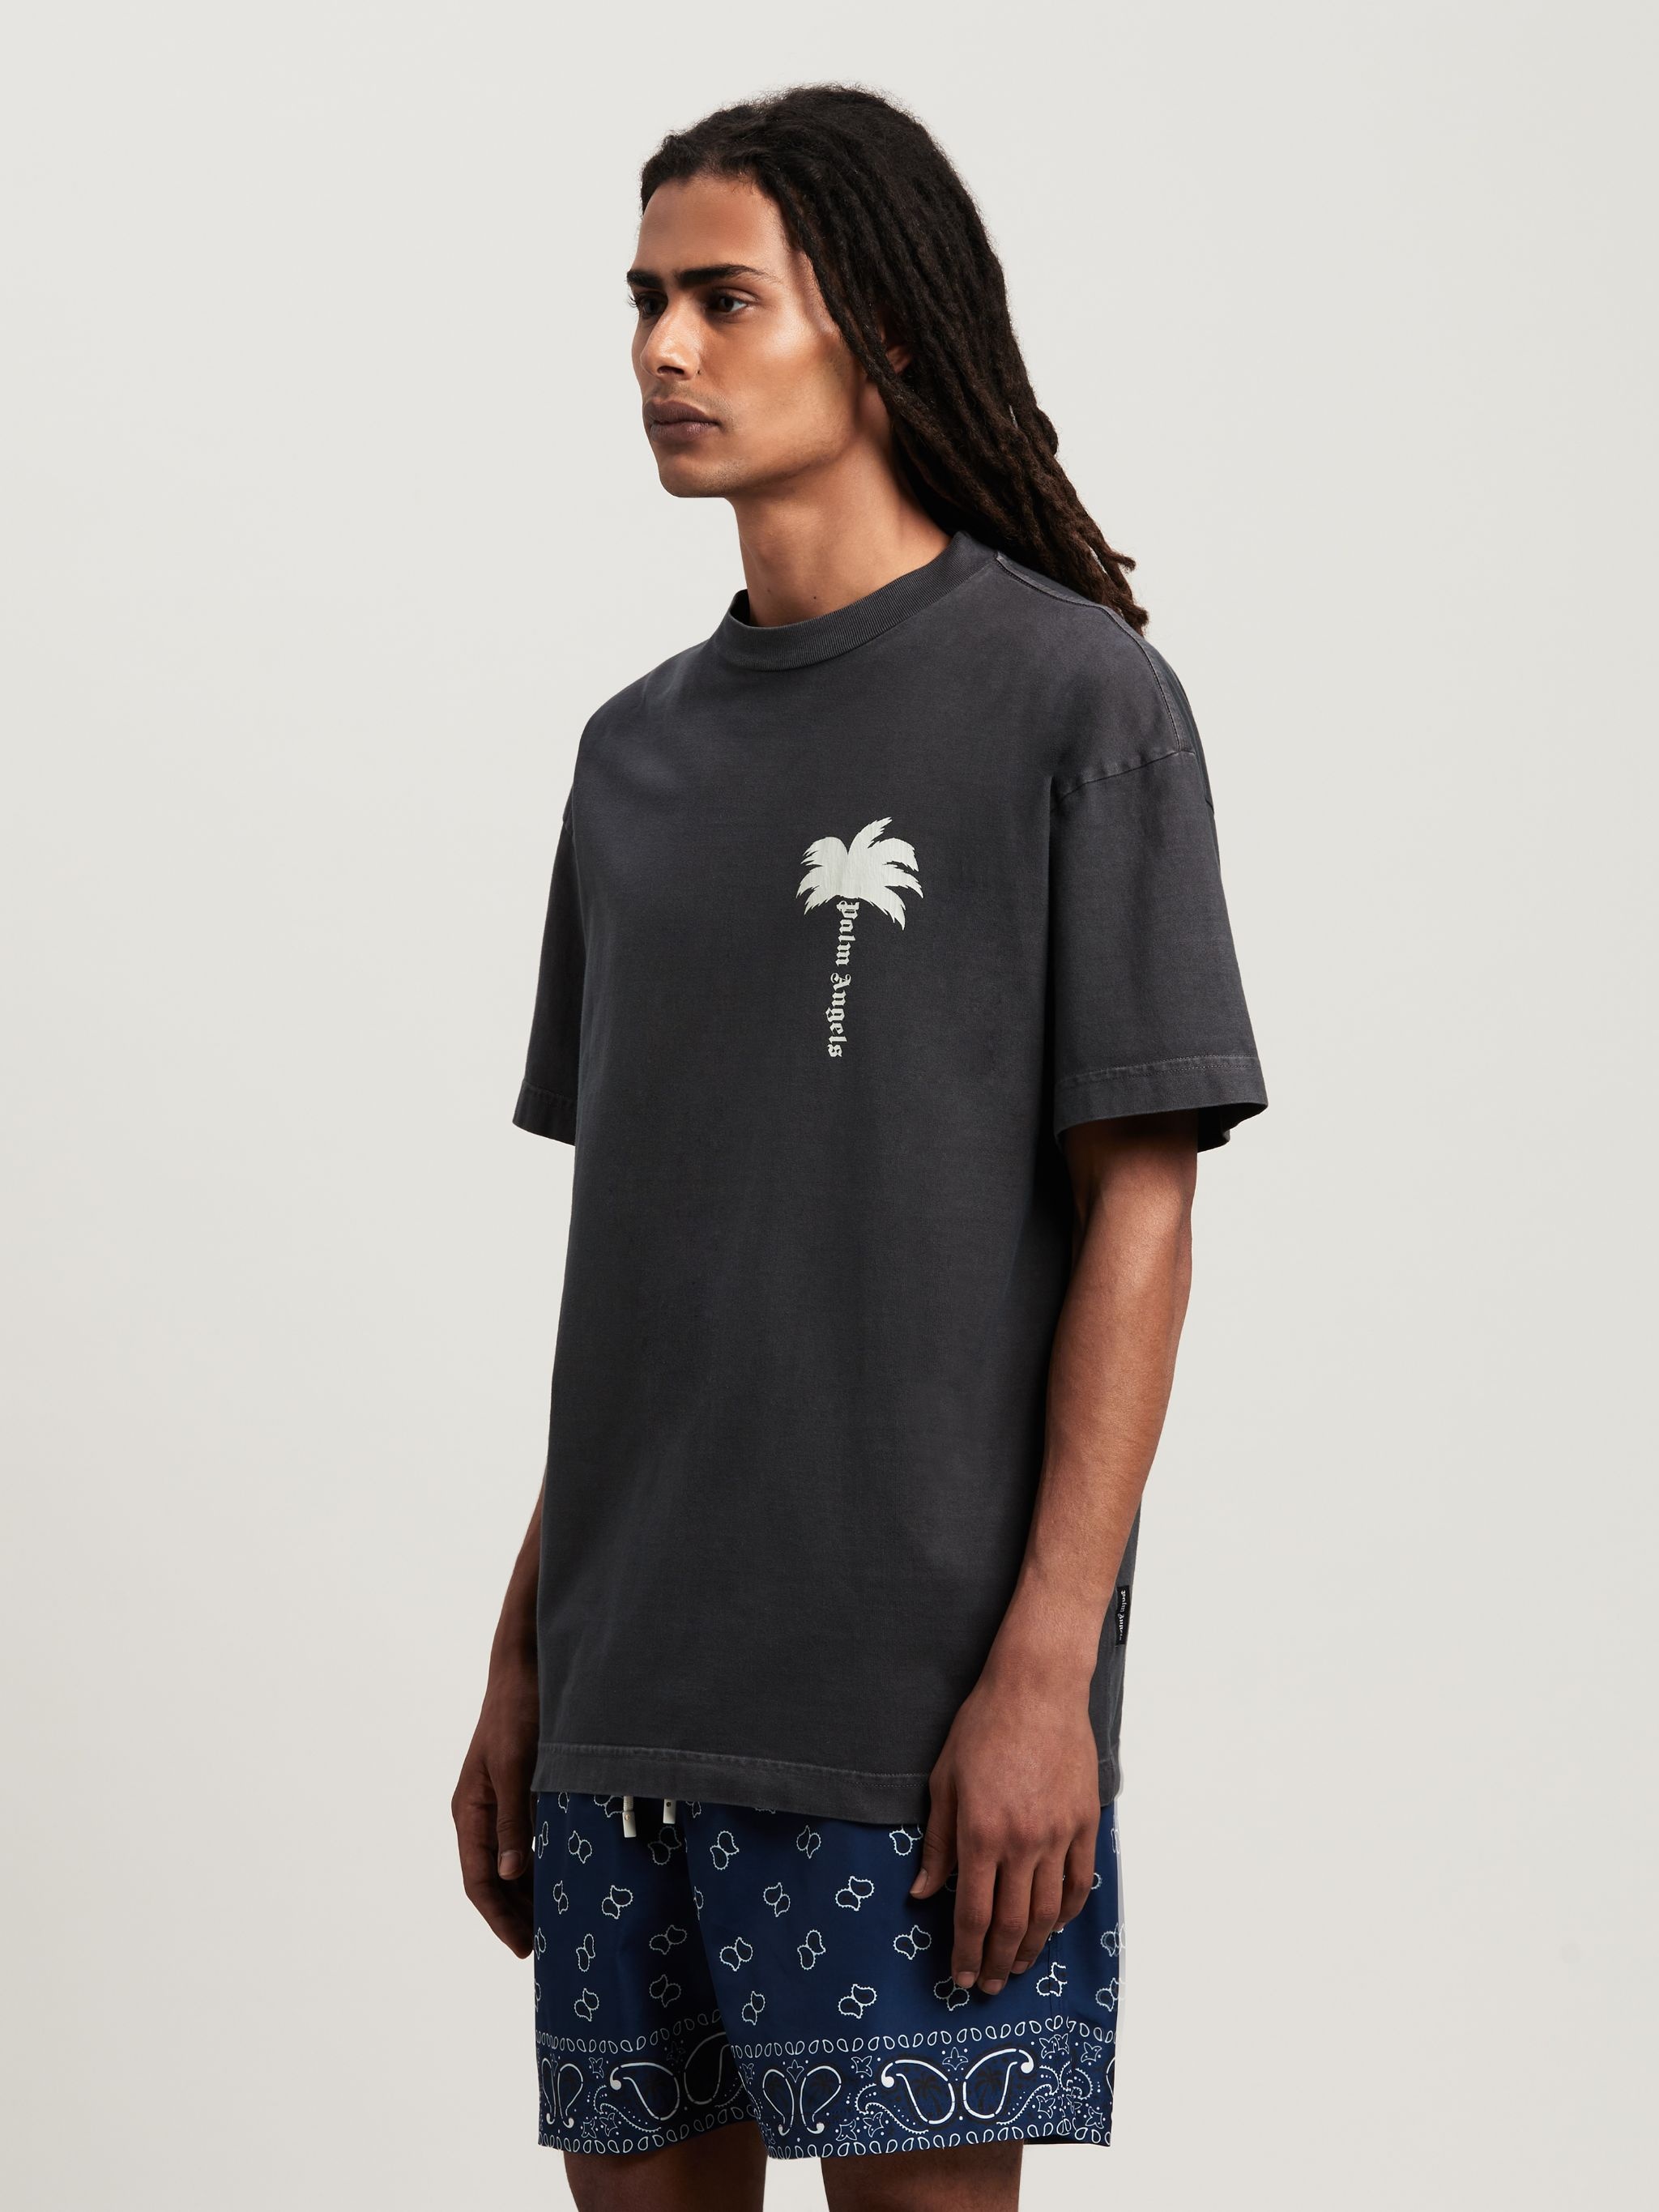 The Palm T-Shirt - 4